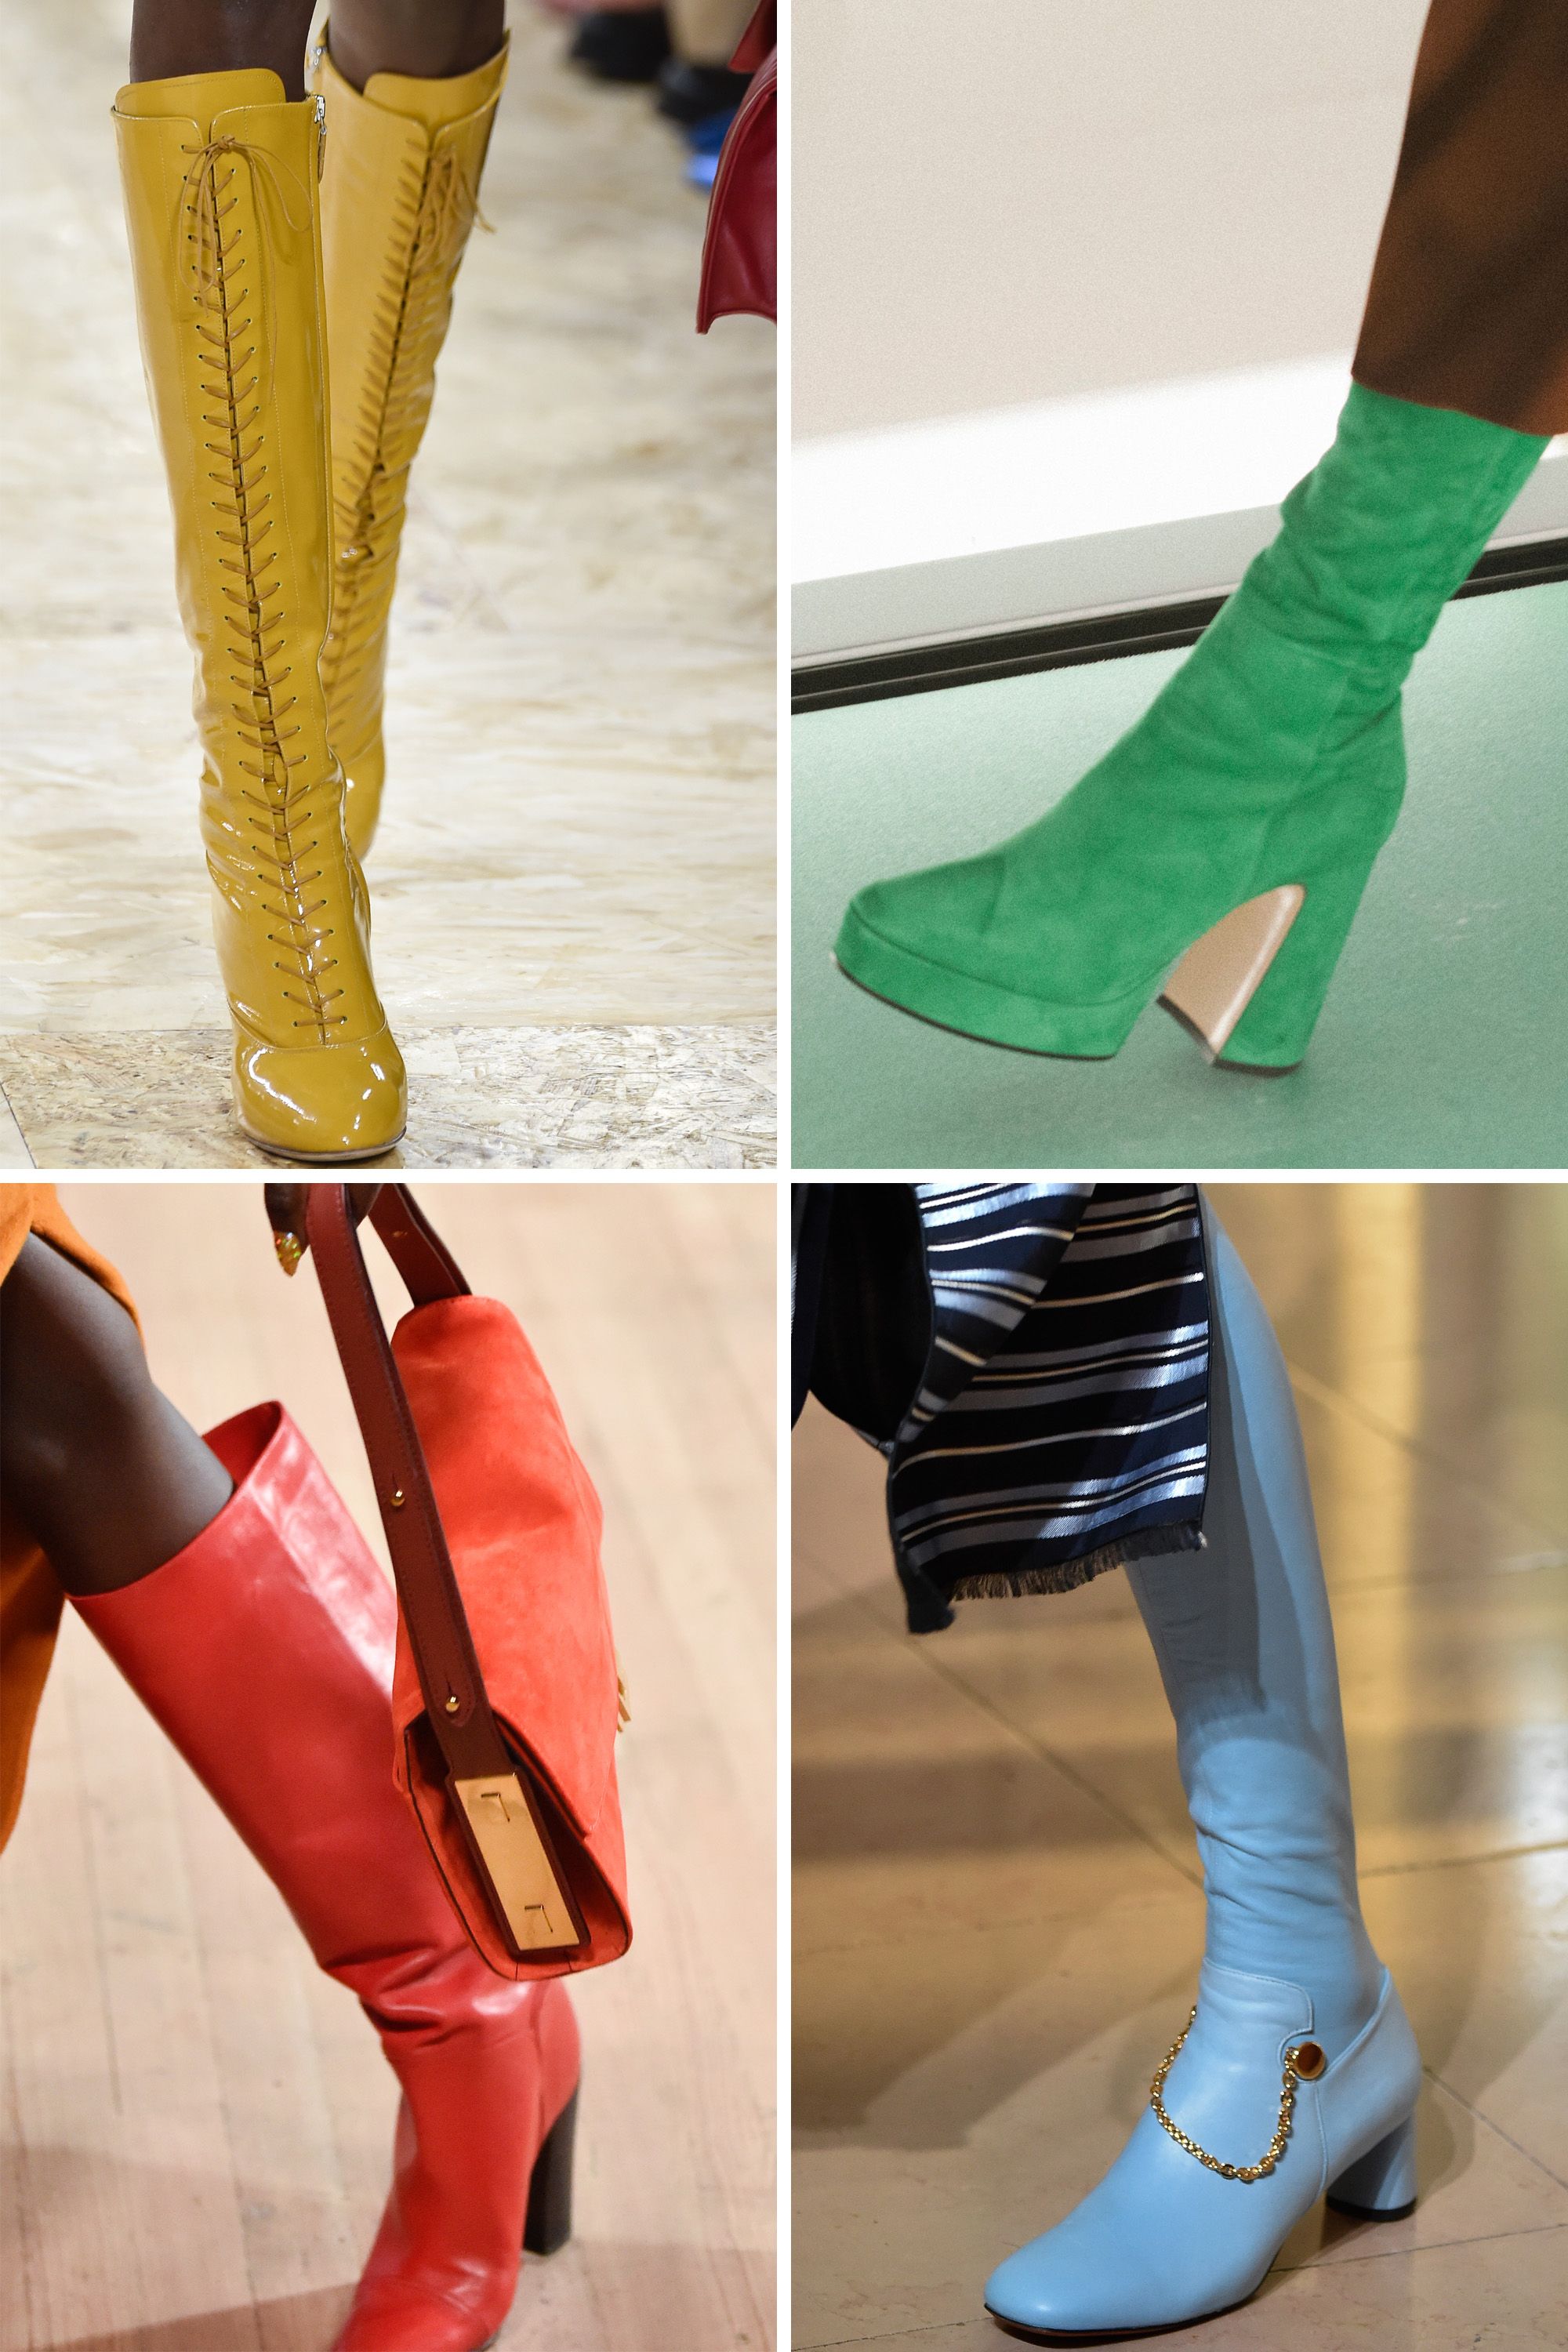 Popular Shoe Trends 2020 - Trending Shoes for Women